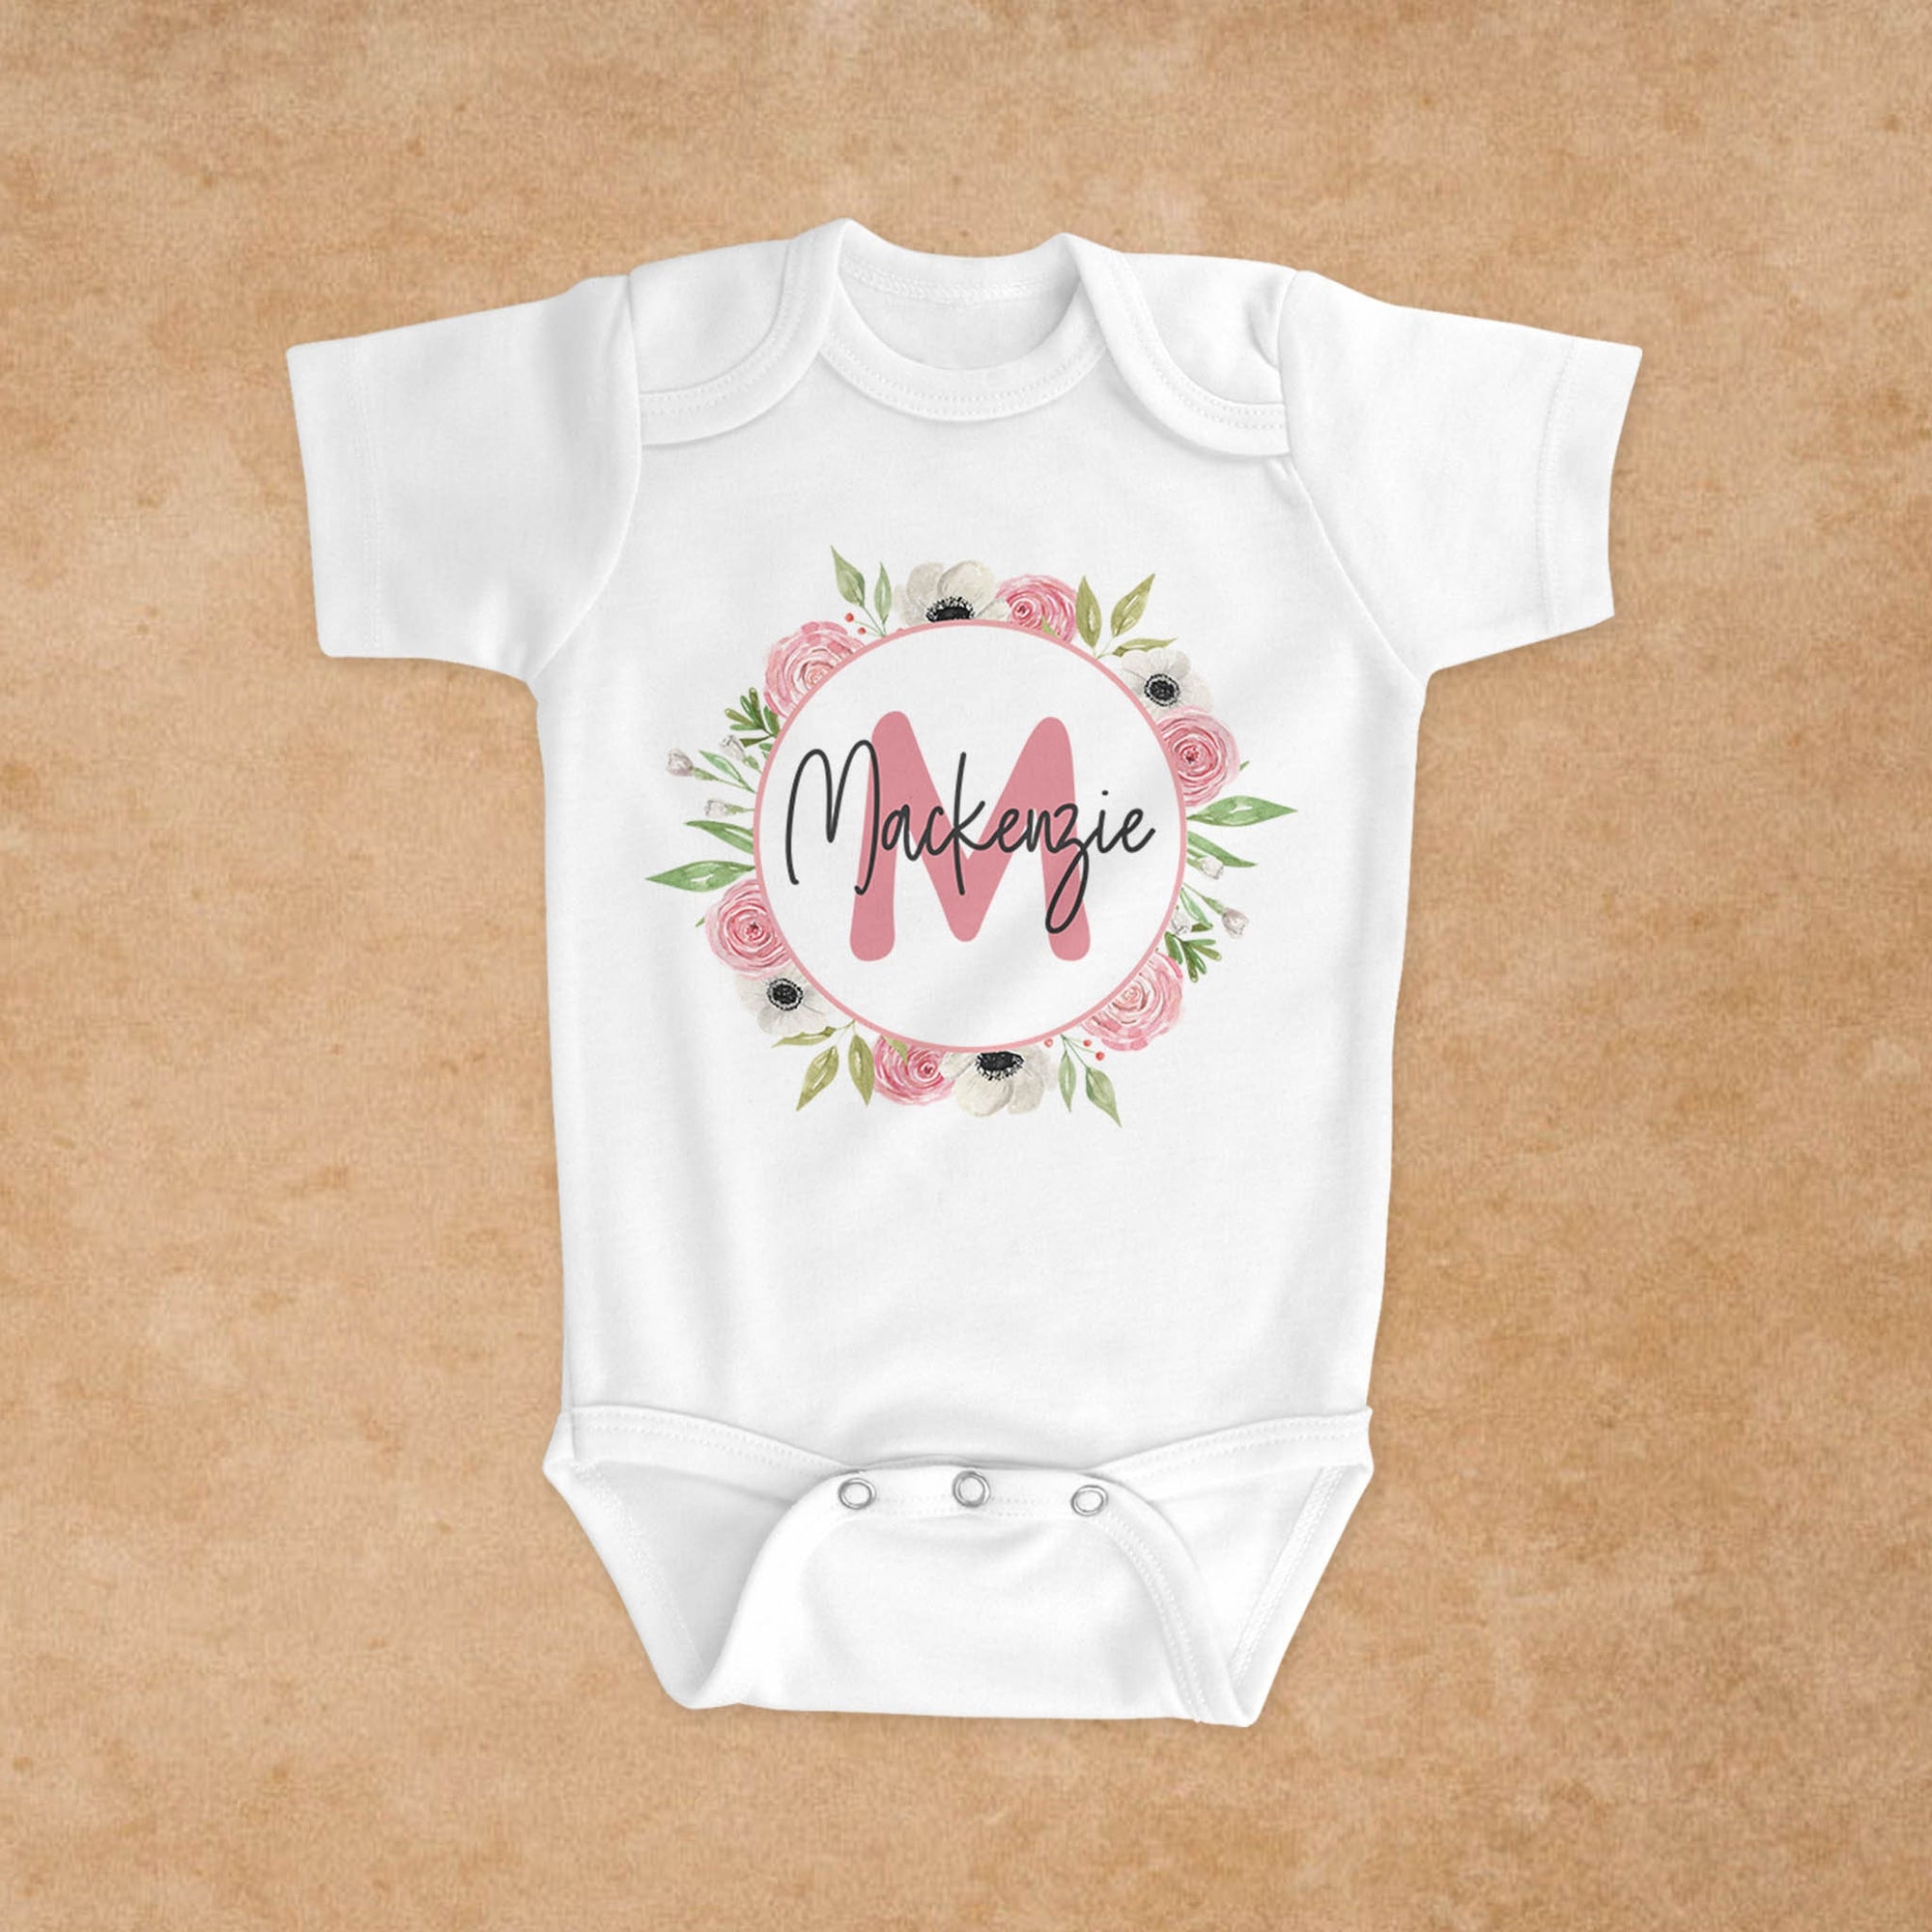 Personalized Baby Onesie | Custom Baby Gifts | Baby Shower | Pink & White Rose Monogram